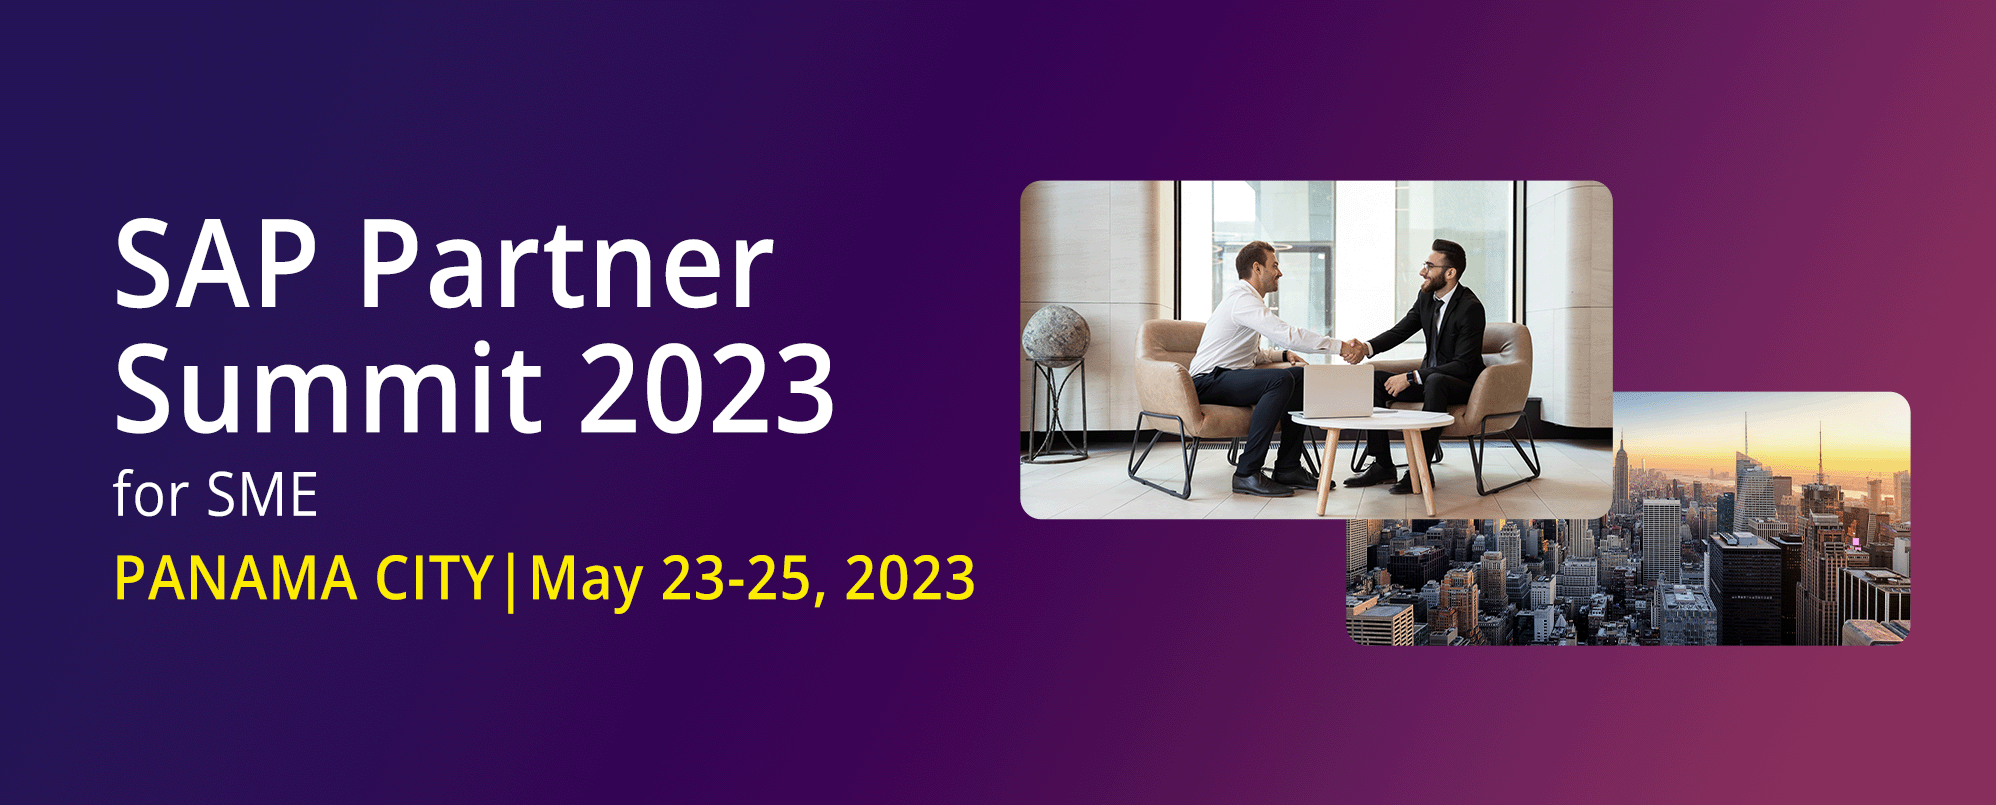 SAP Partner Summit 2023